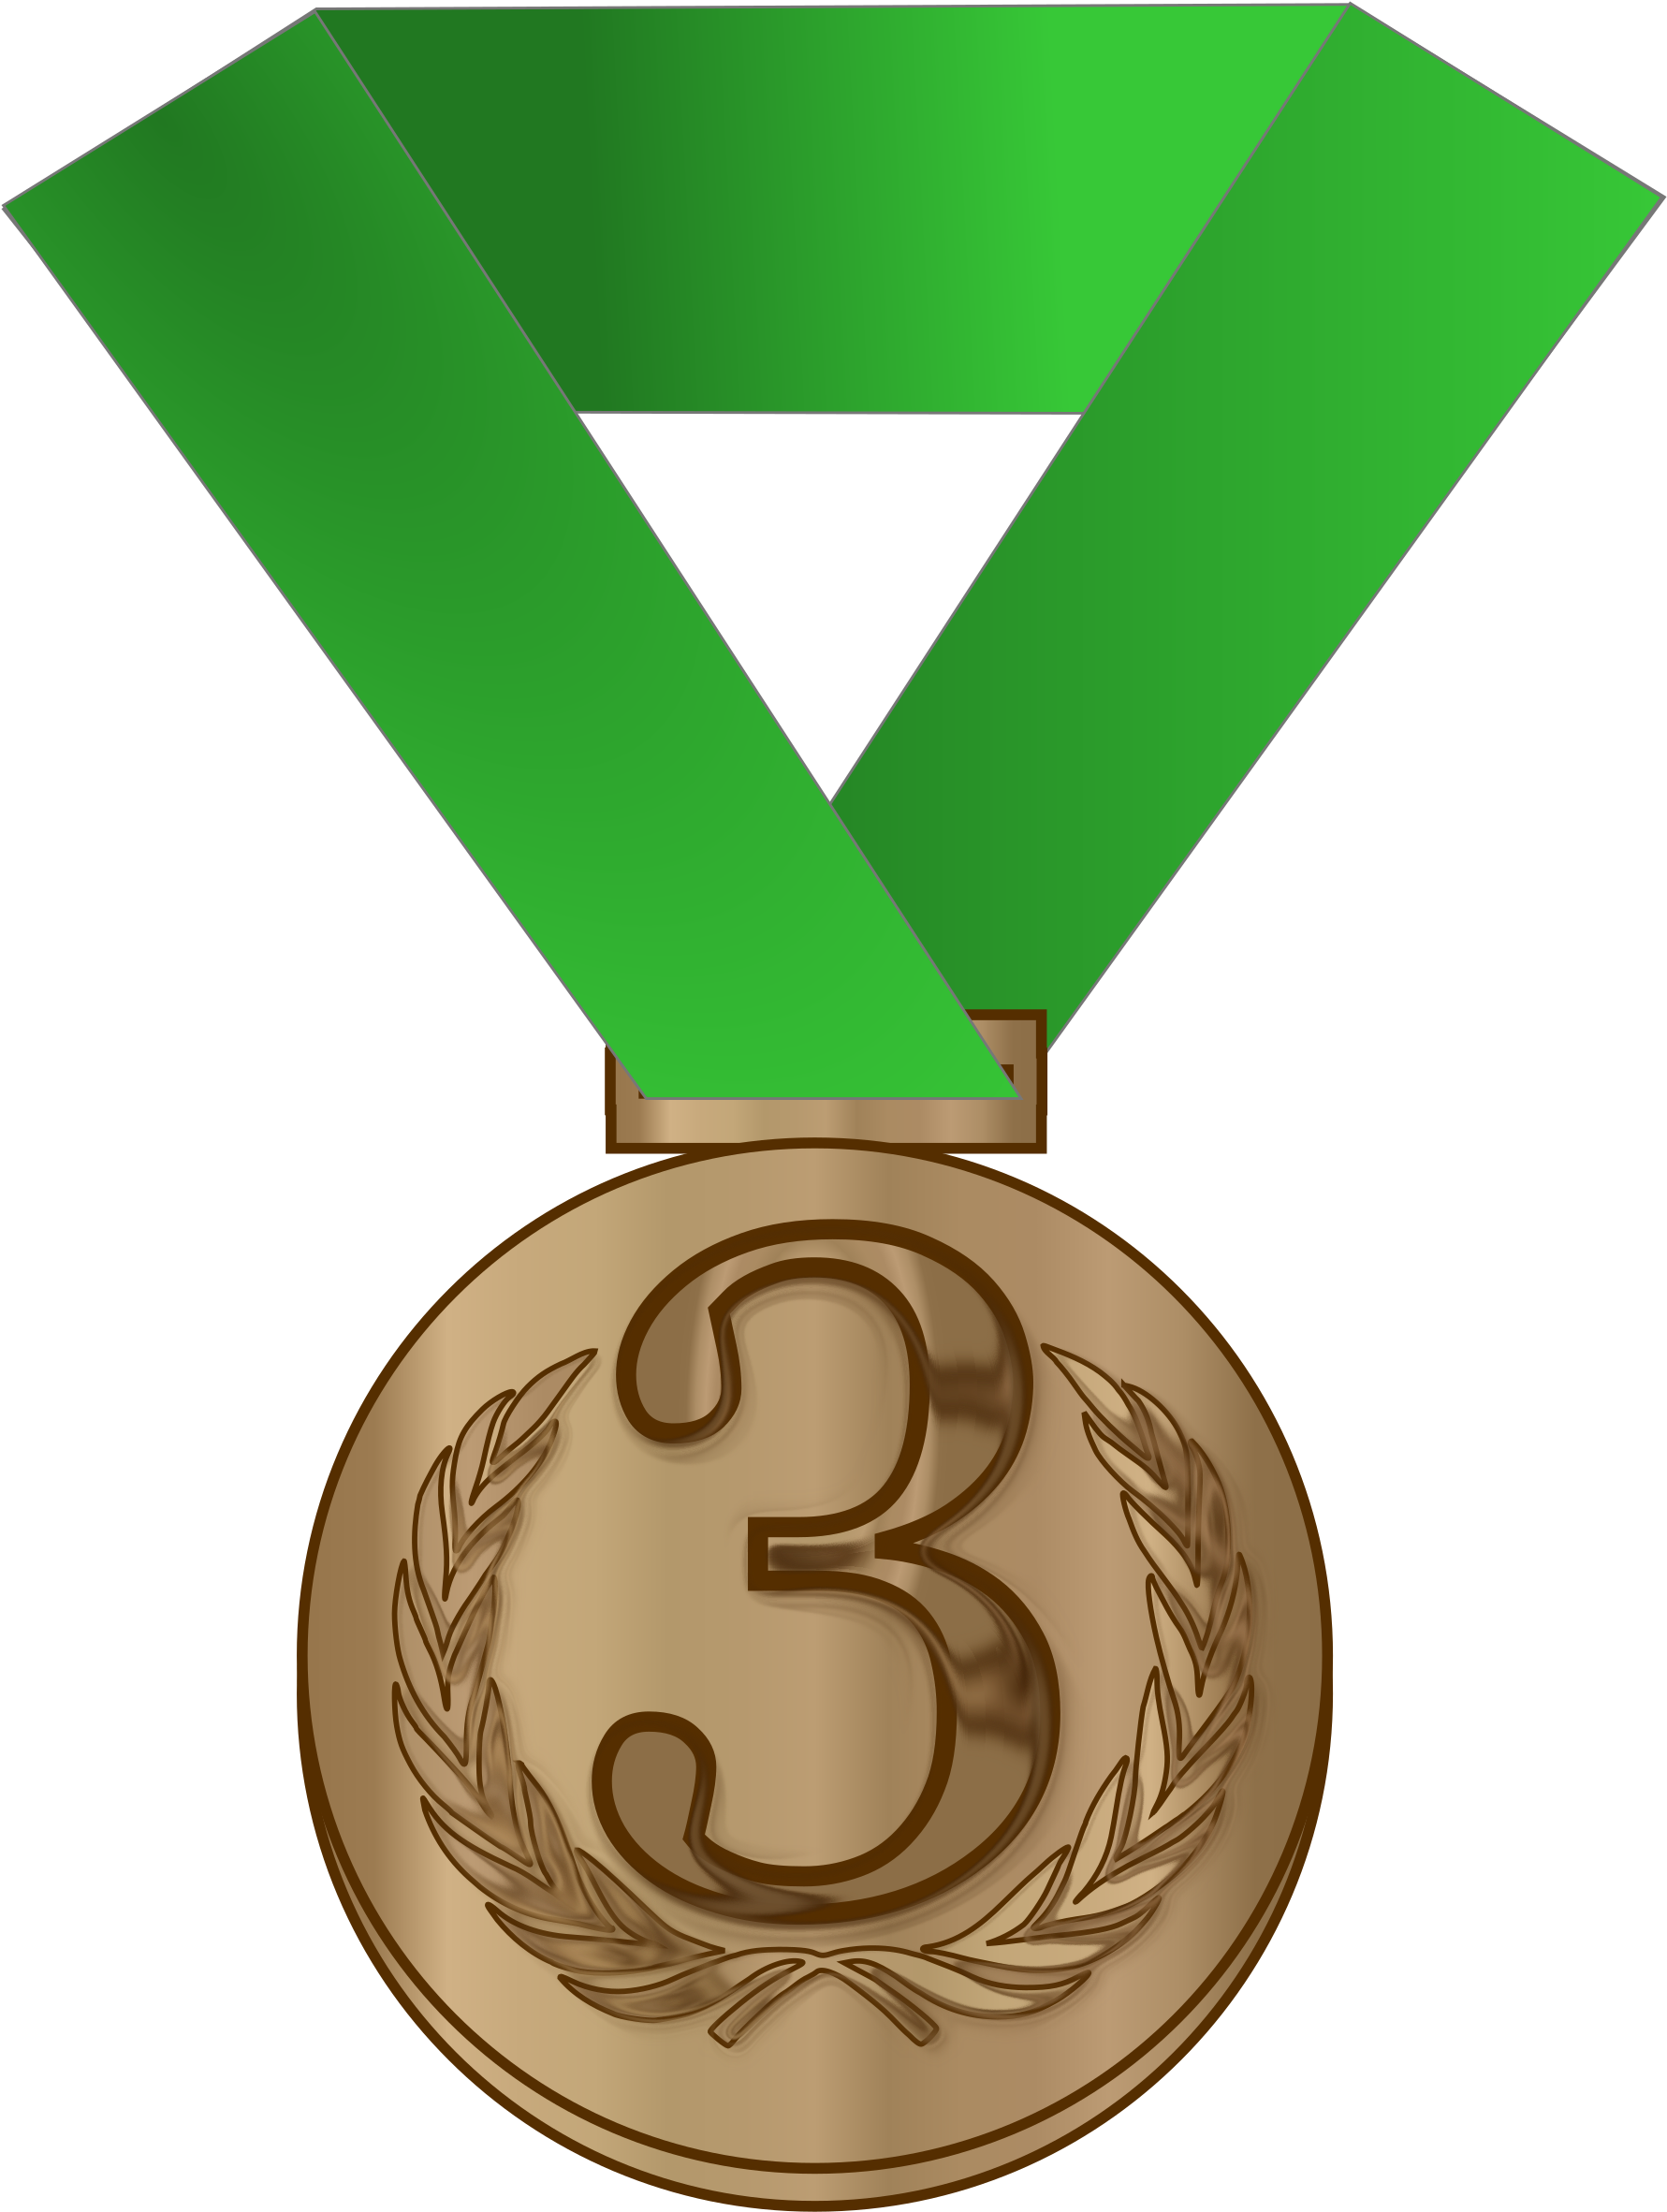 Три медали на одном пьедестале 8 букв. Бронзовая медаль. Медаль "3 место ". Медали 1 2 3 место на прозрачном фоне. Медаль бронза 3 место.